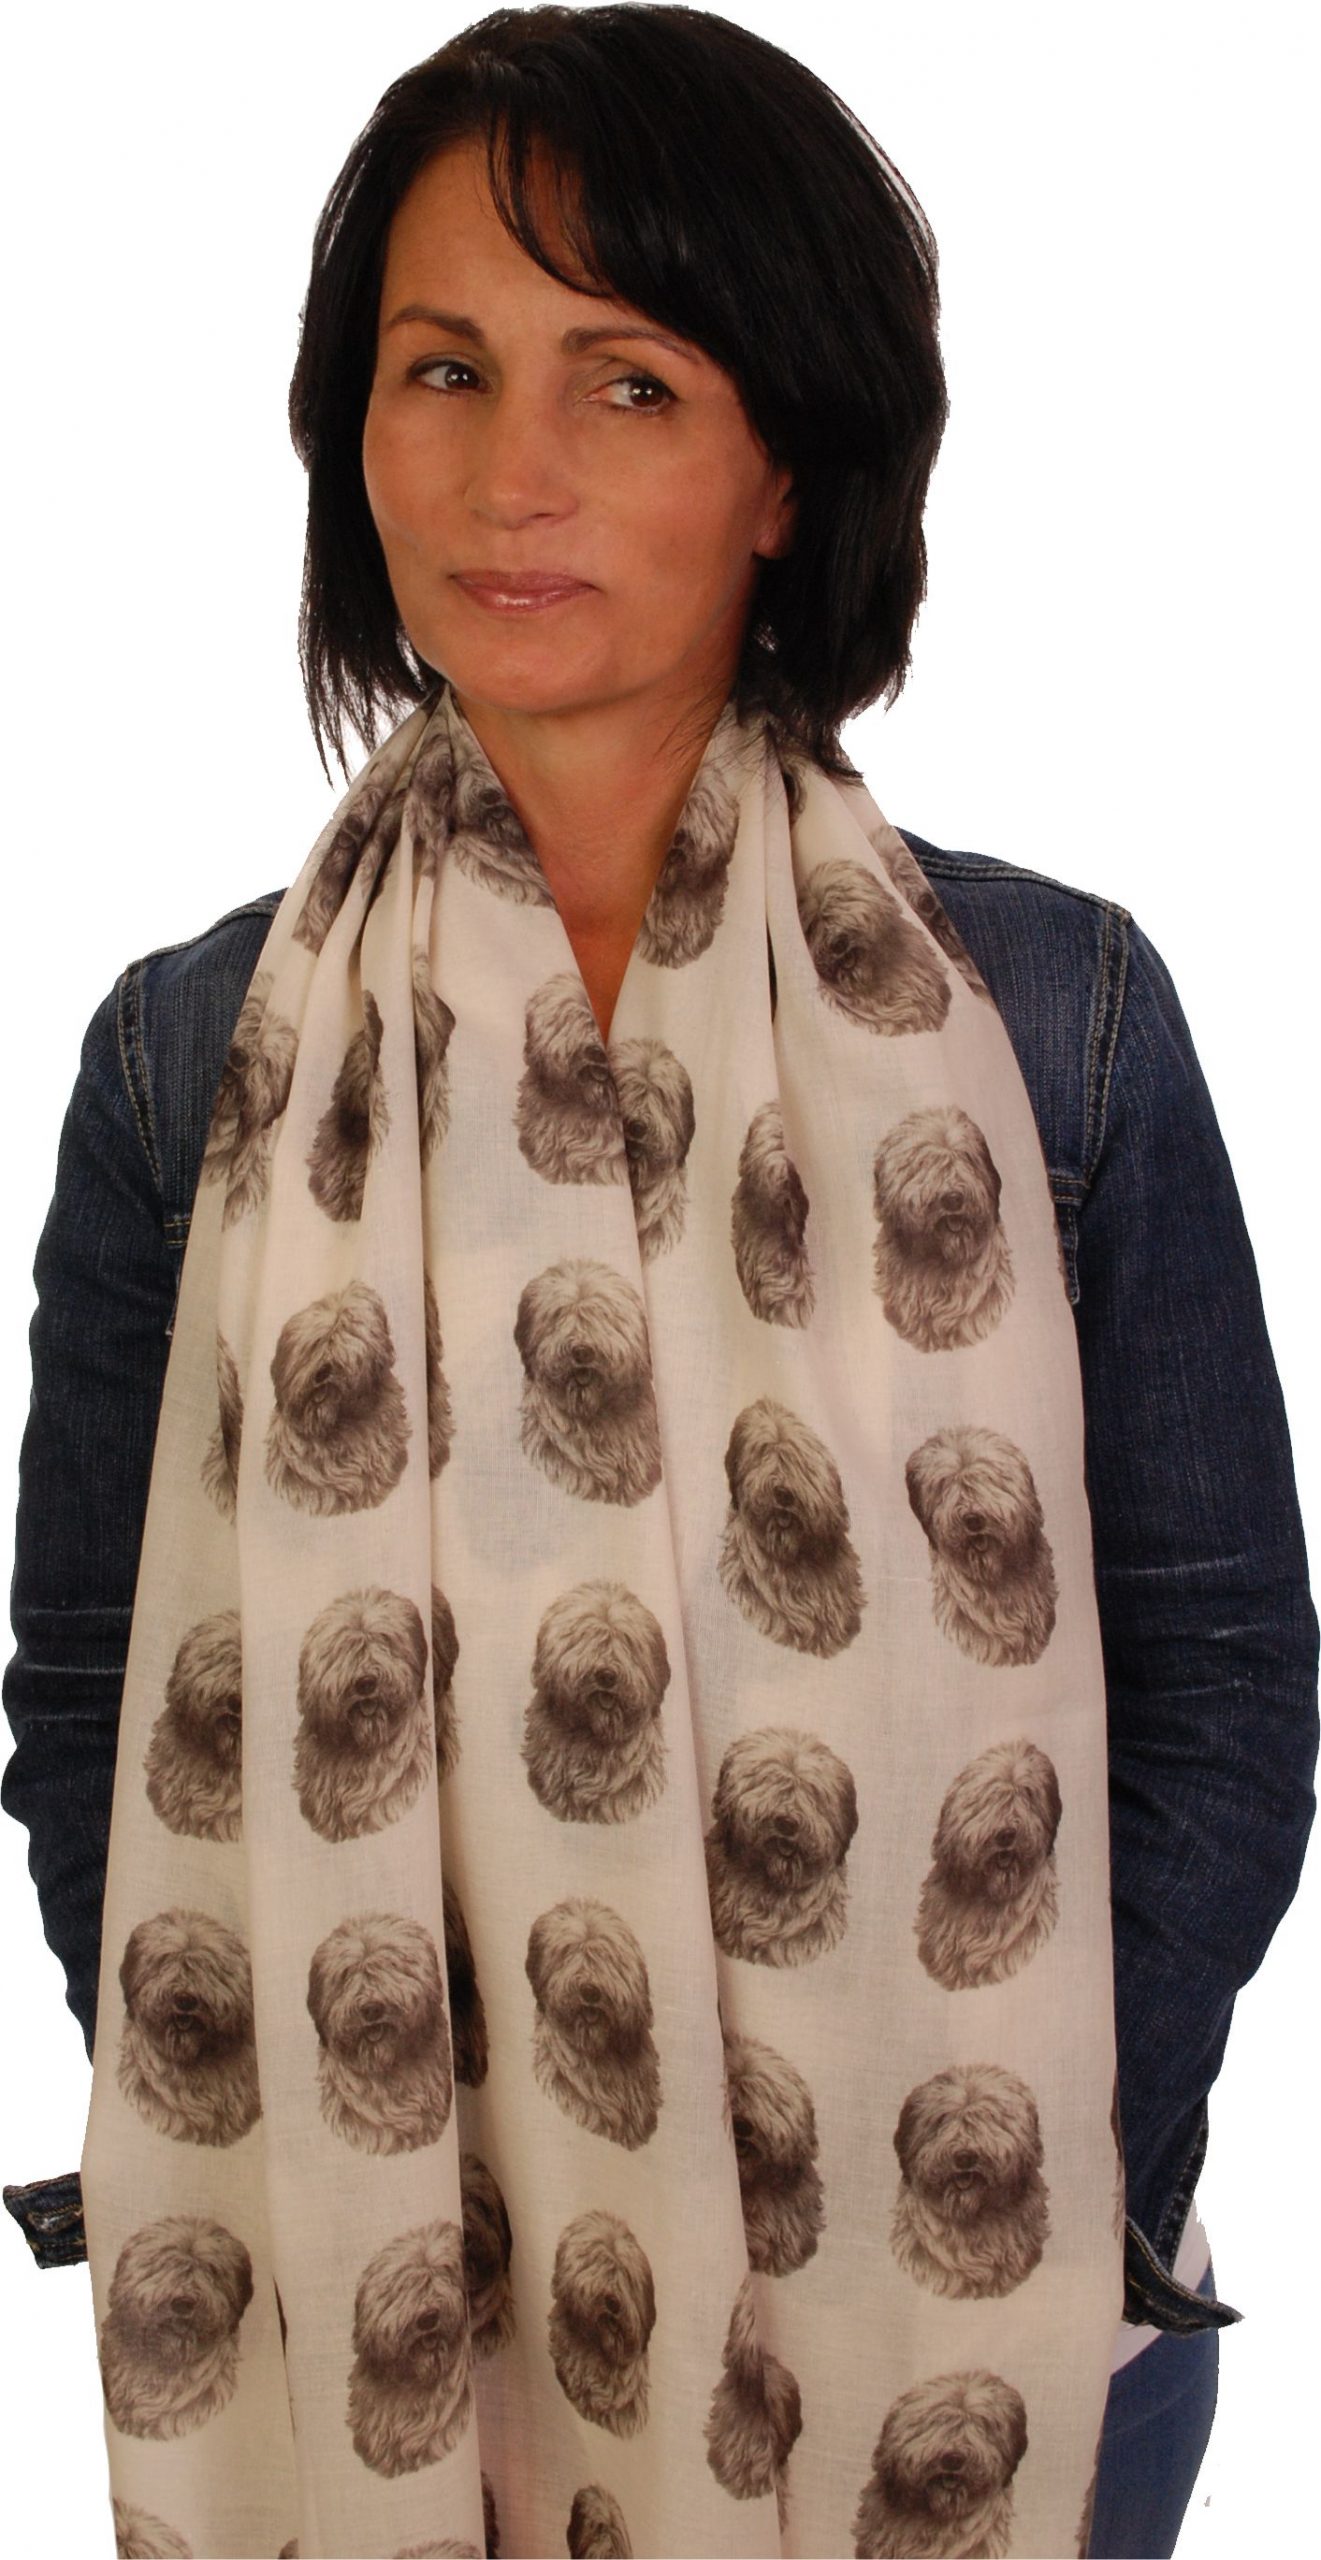 Mike Sibley Old English Sheepdog licensed design ladies fashion scarf